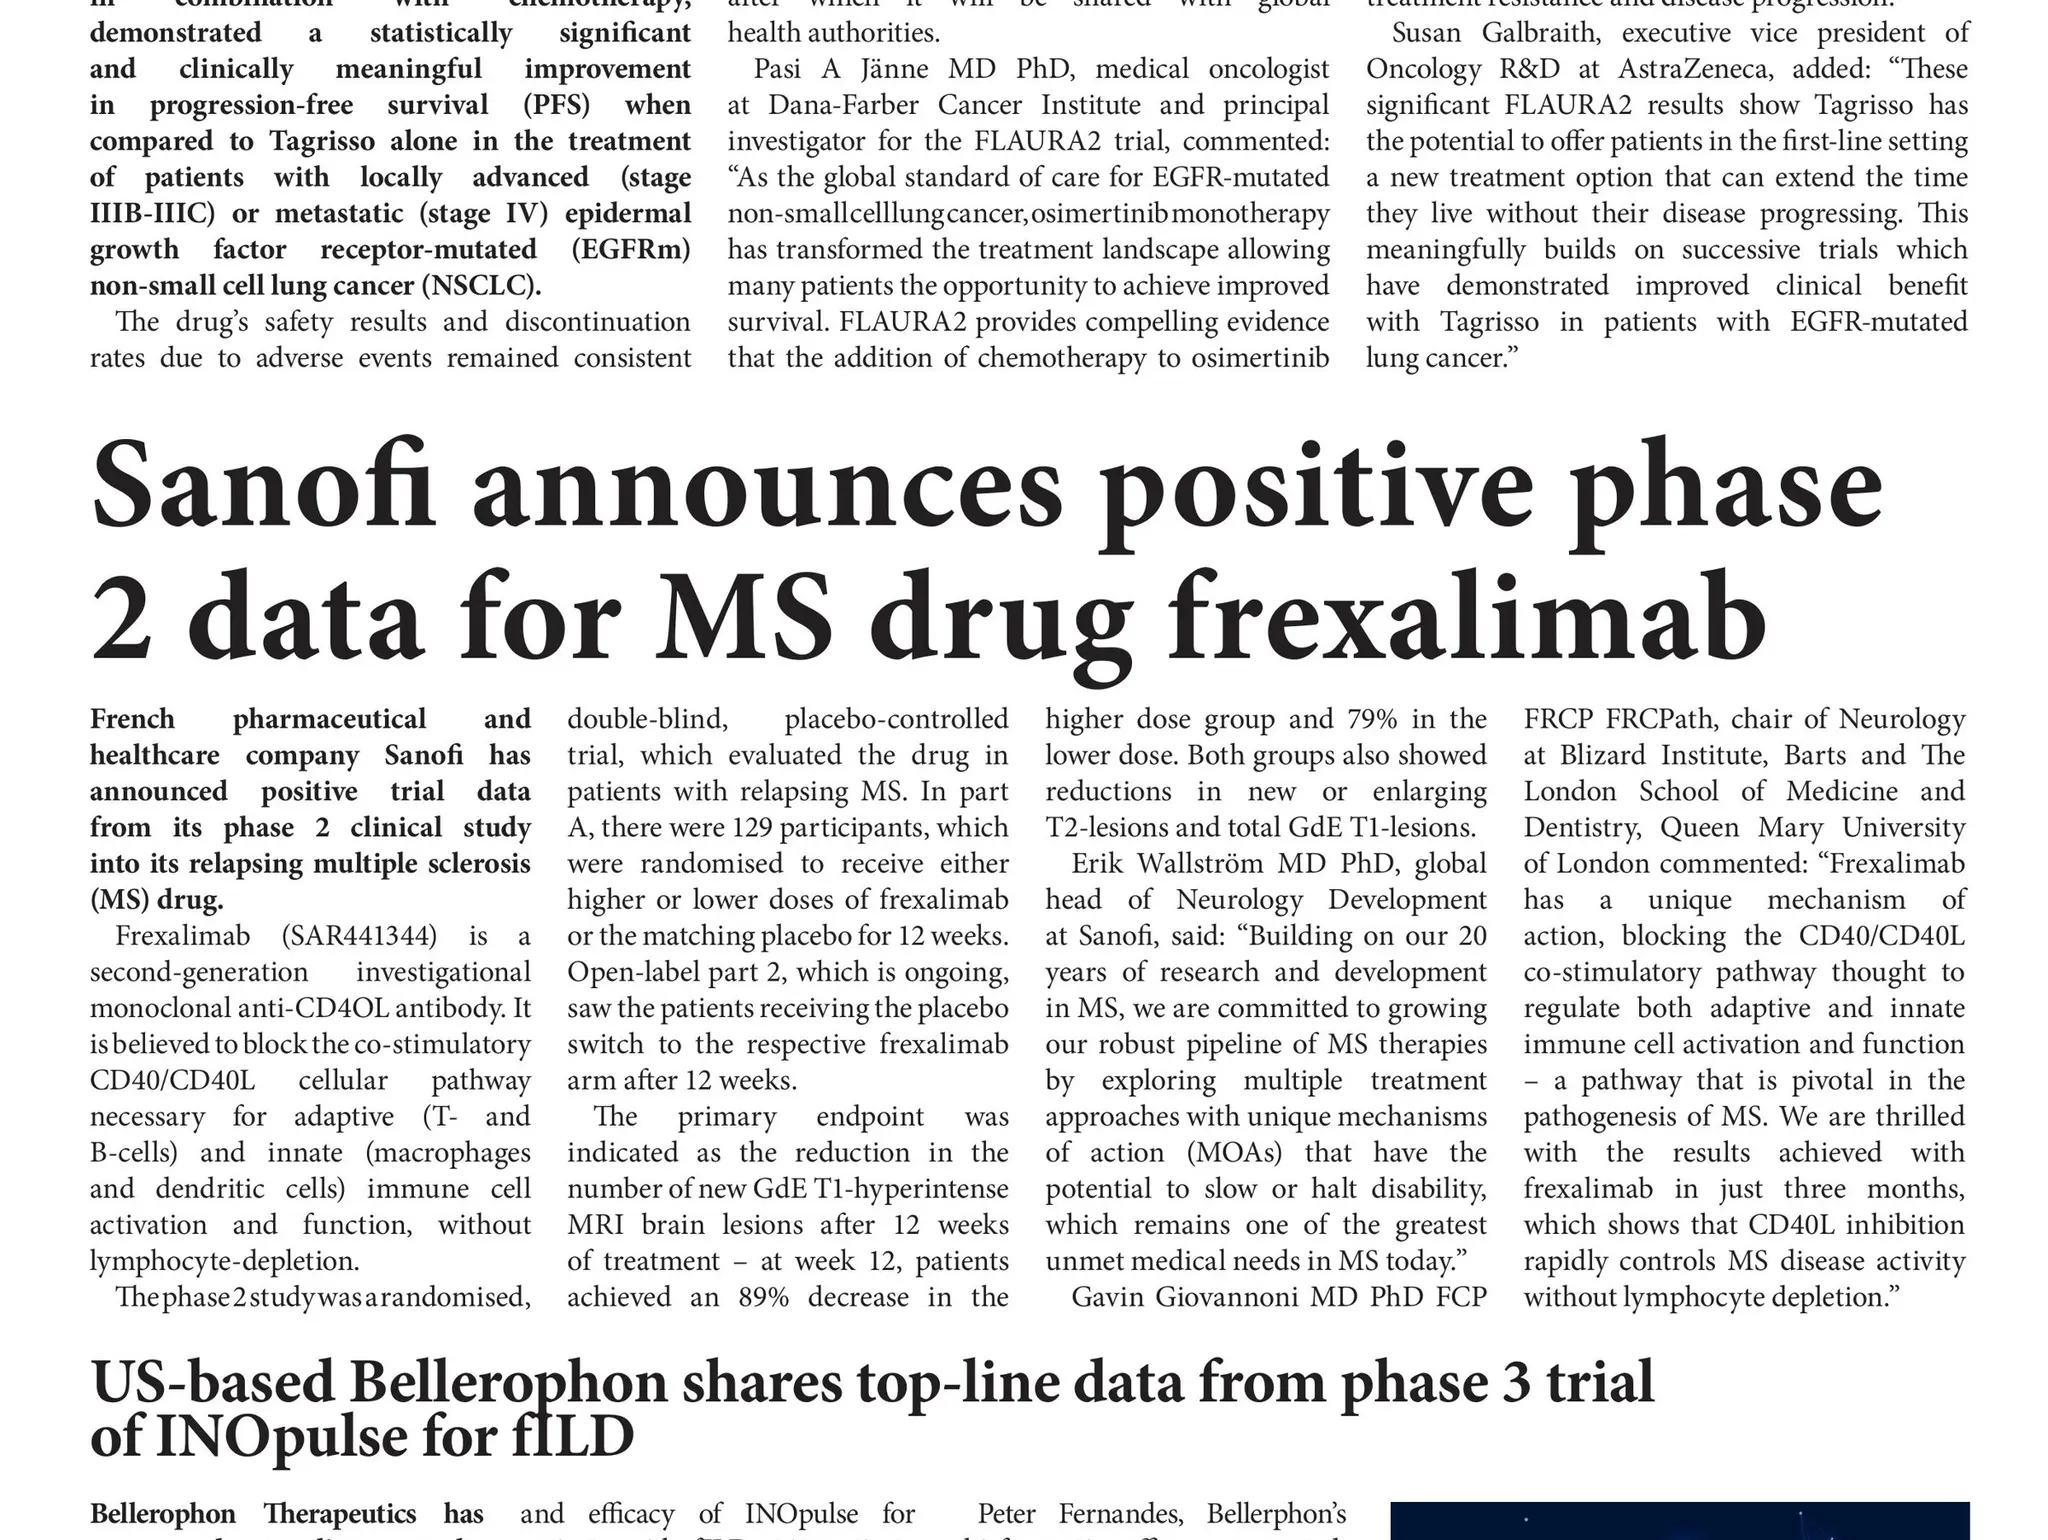 Sanofi announces positive phase 2 data for MS drug frexalimab